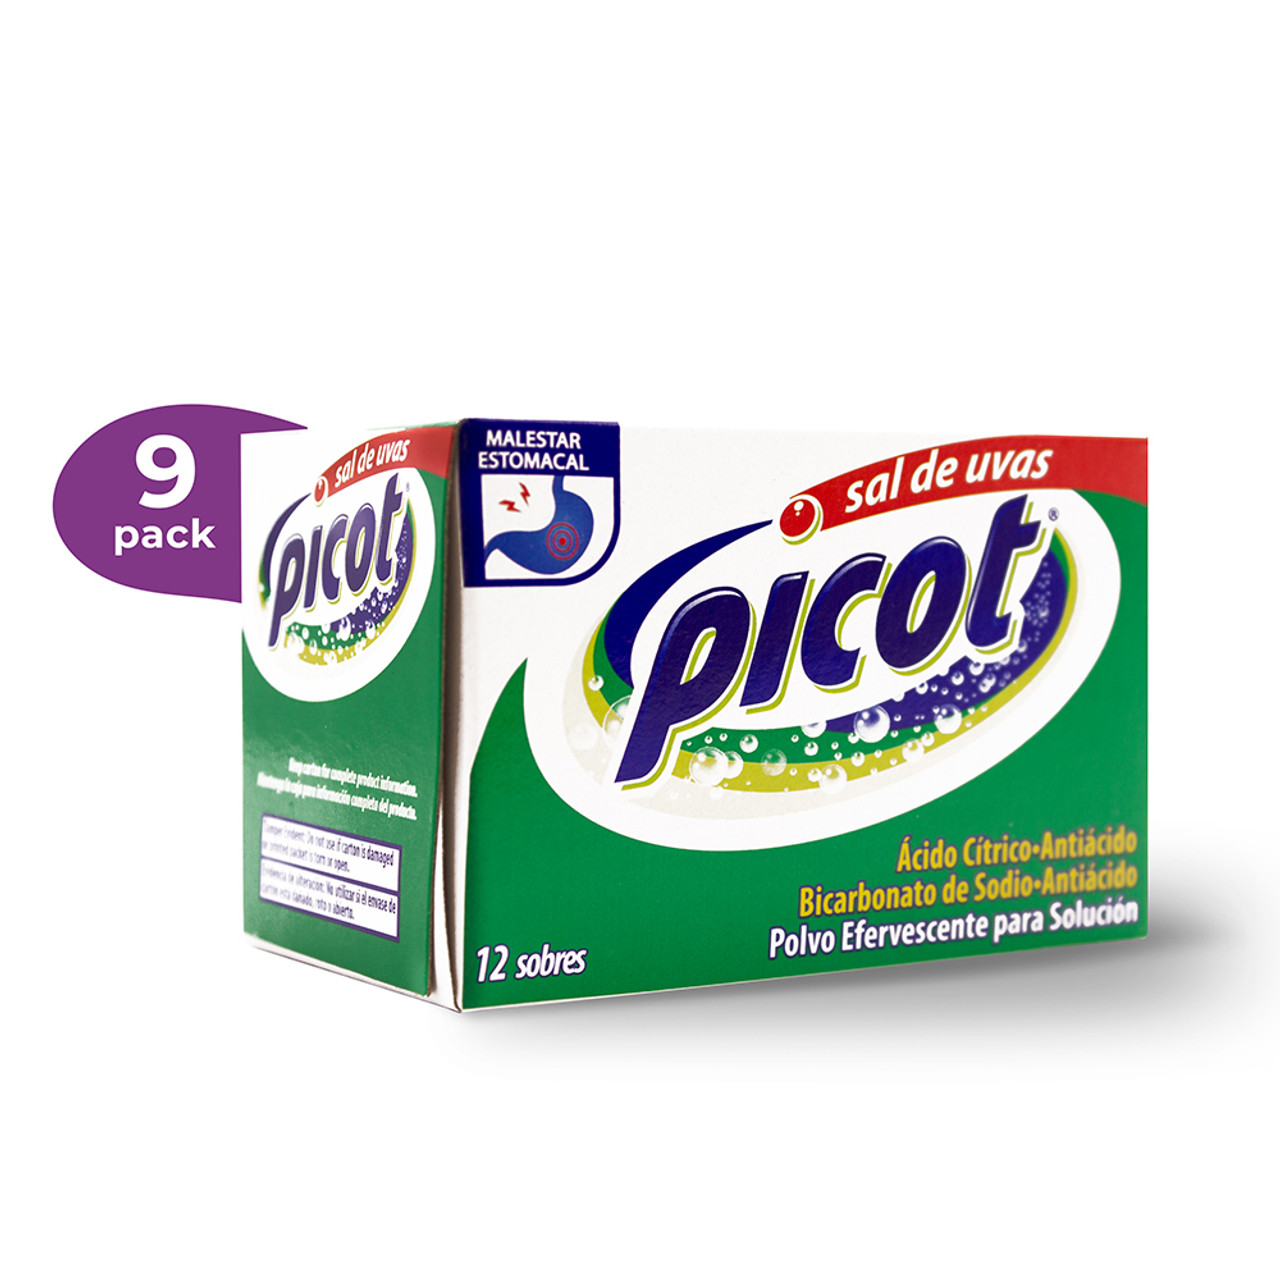 Sal de Uvas Picot Plus (9 Envelopes) – Pharmacy PVR